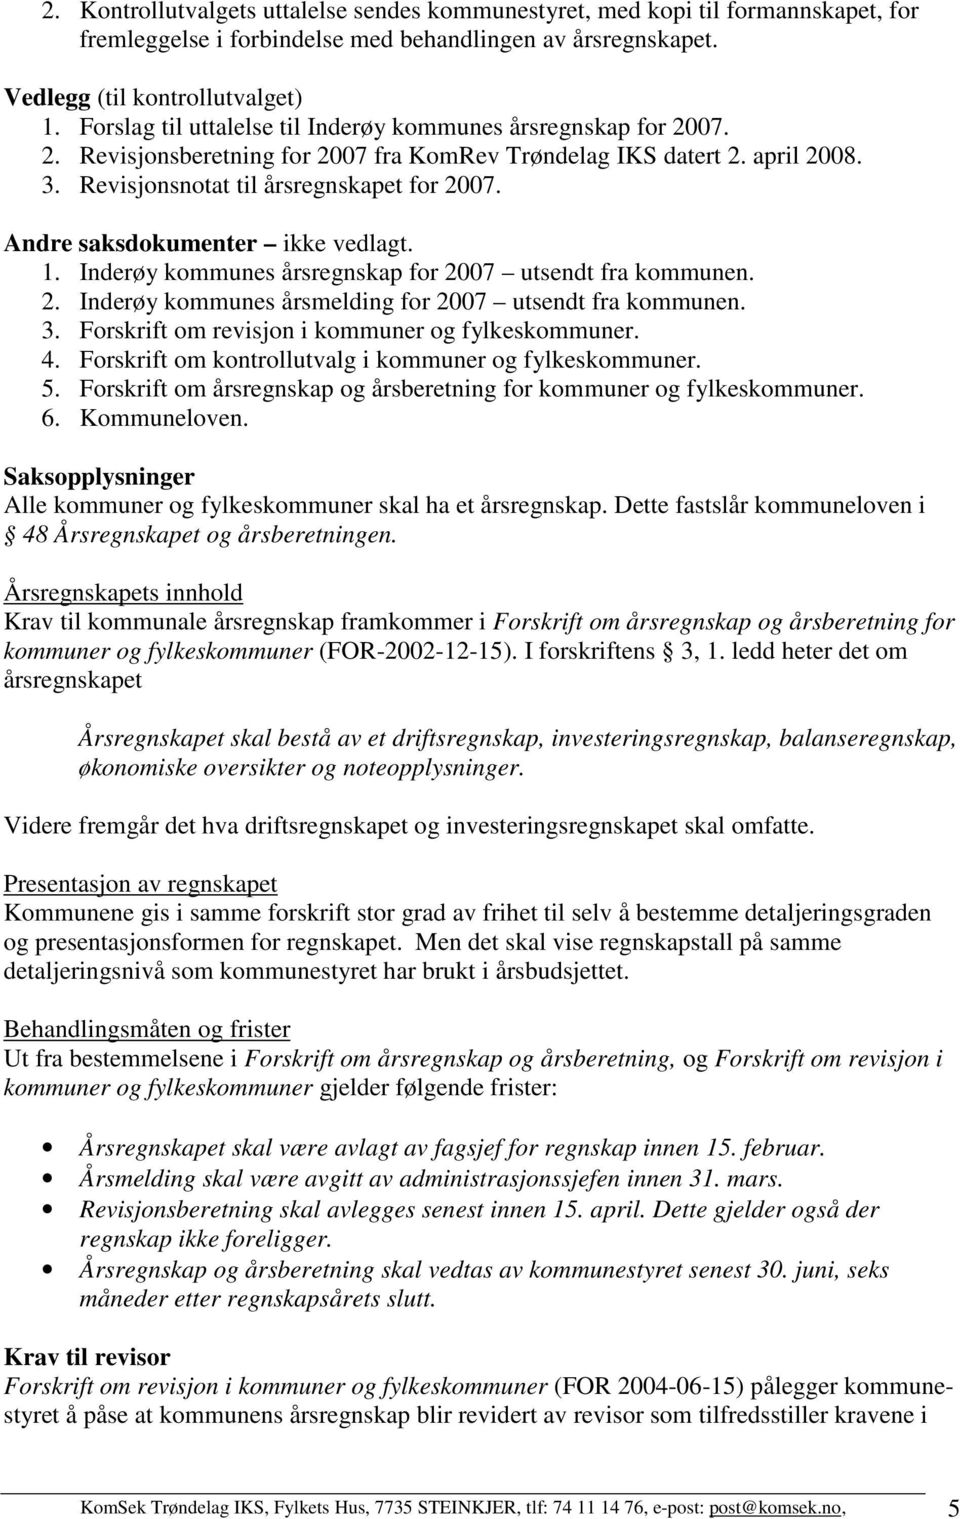 Andre saksdokumenter ikke vedlagt. 1. Inderøy kommunes årsregnskap for 2007 utsendt fra kommunen. 2. Inderøy kommunes årsmelding for 2007 utsendt fra kommunen. 3.